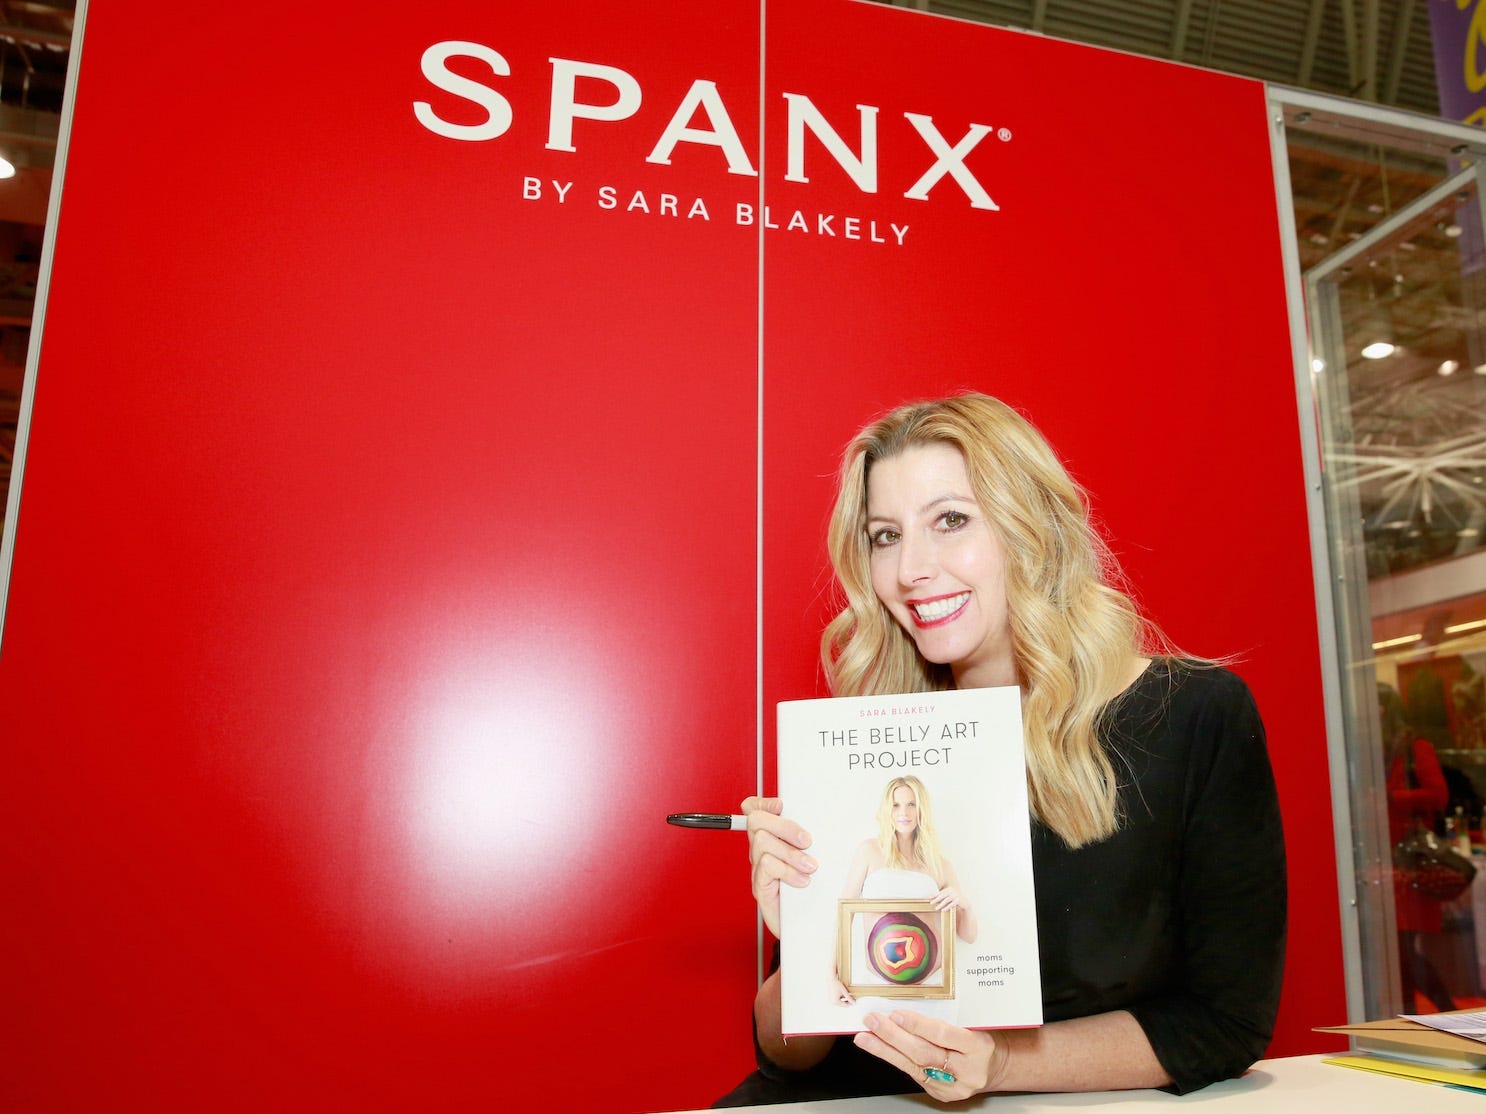 Spanx founder Sara Blakely